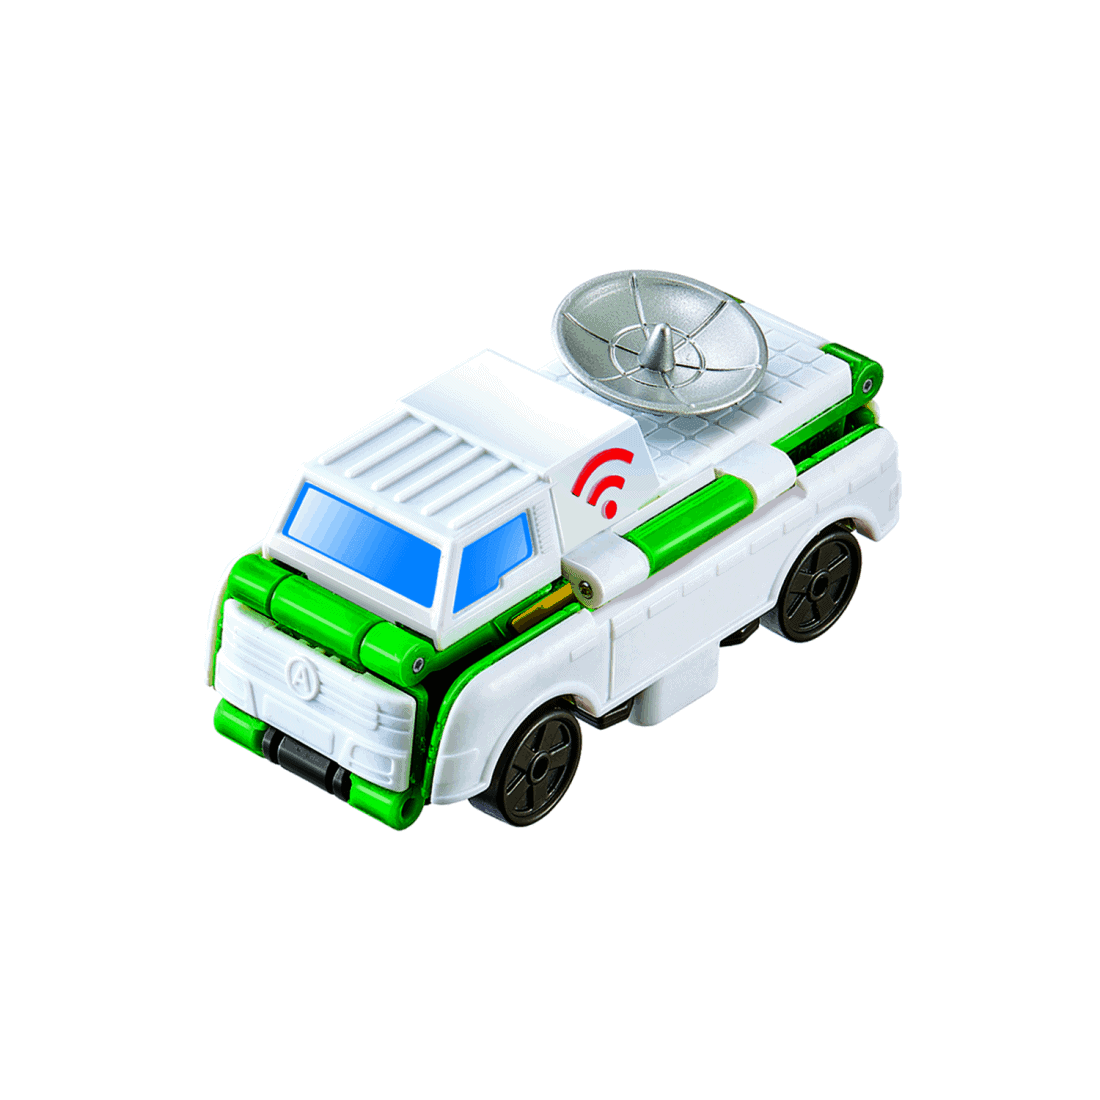 Flip Cars - 2 cars in One : Communication Van - Military Ambulance